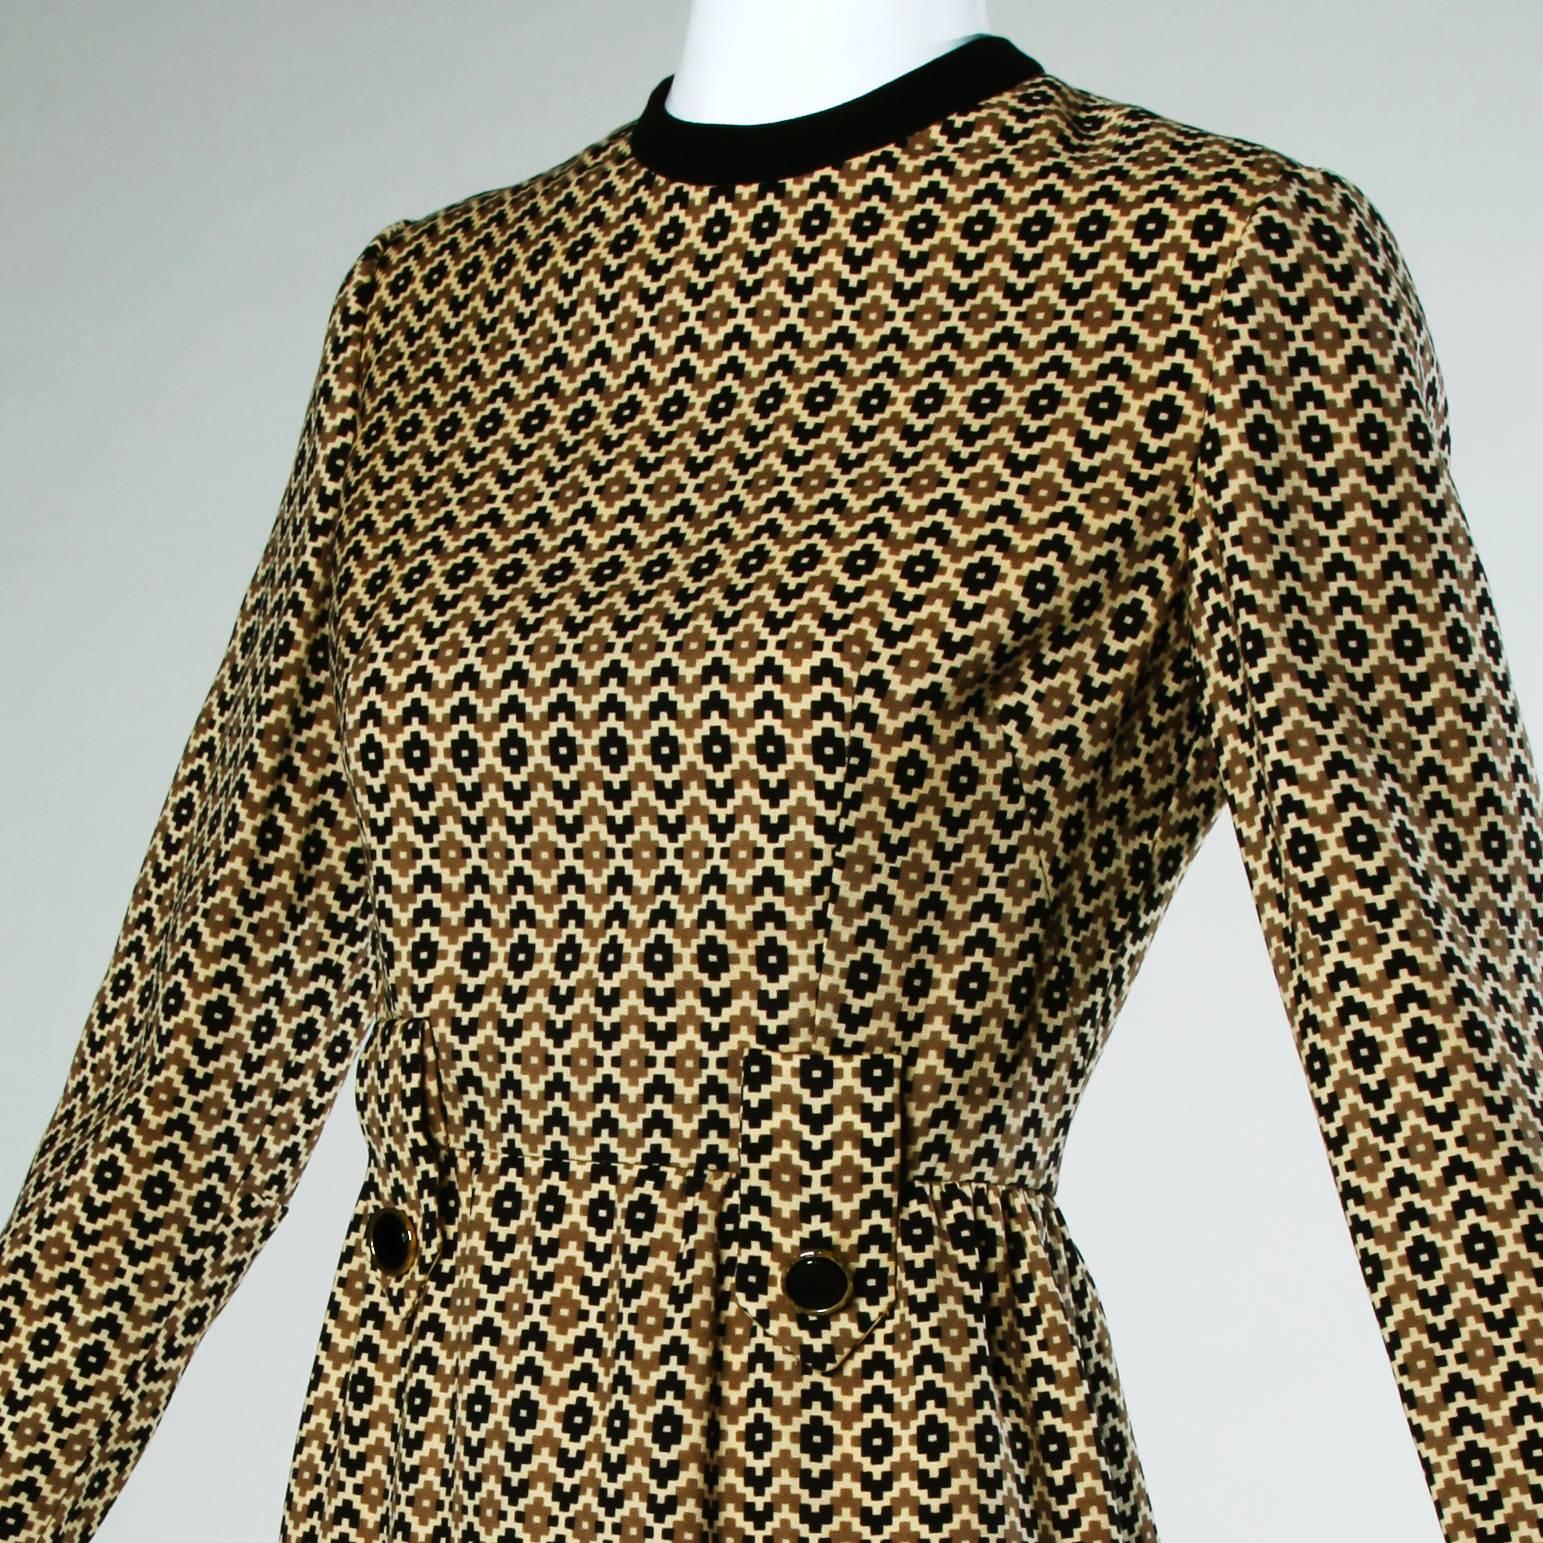 Adele Simpson Vintage 1960s Geometric Wool Dress + Scarf Set 2-Piece Ensemble For Sale 1